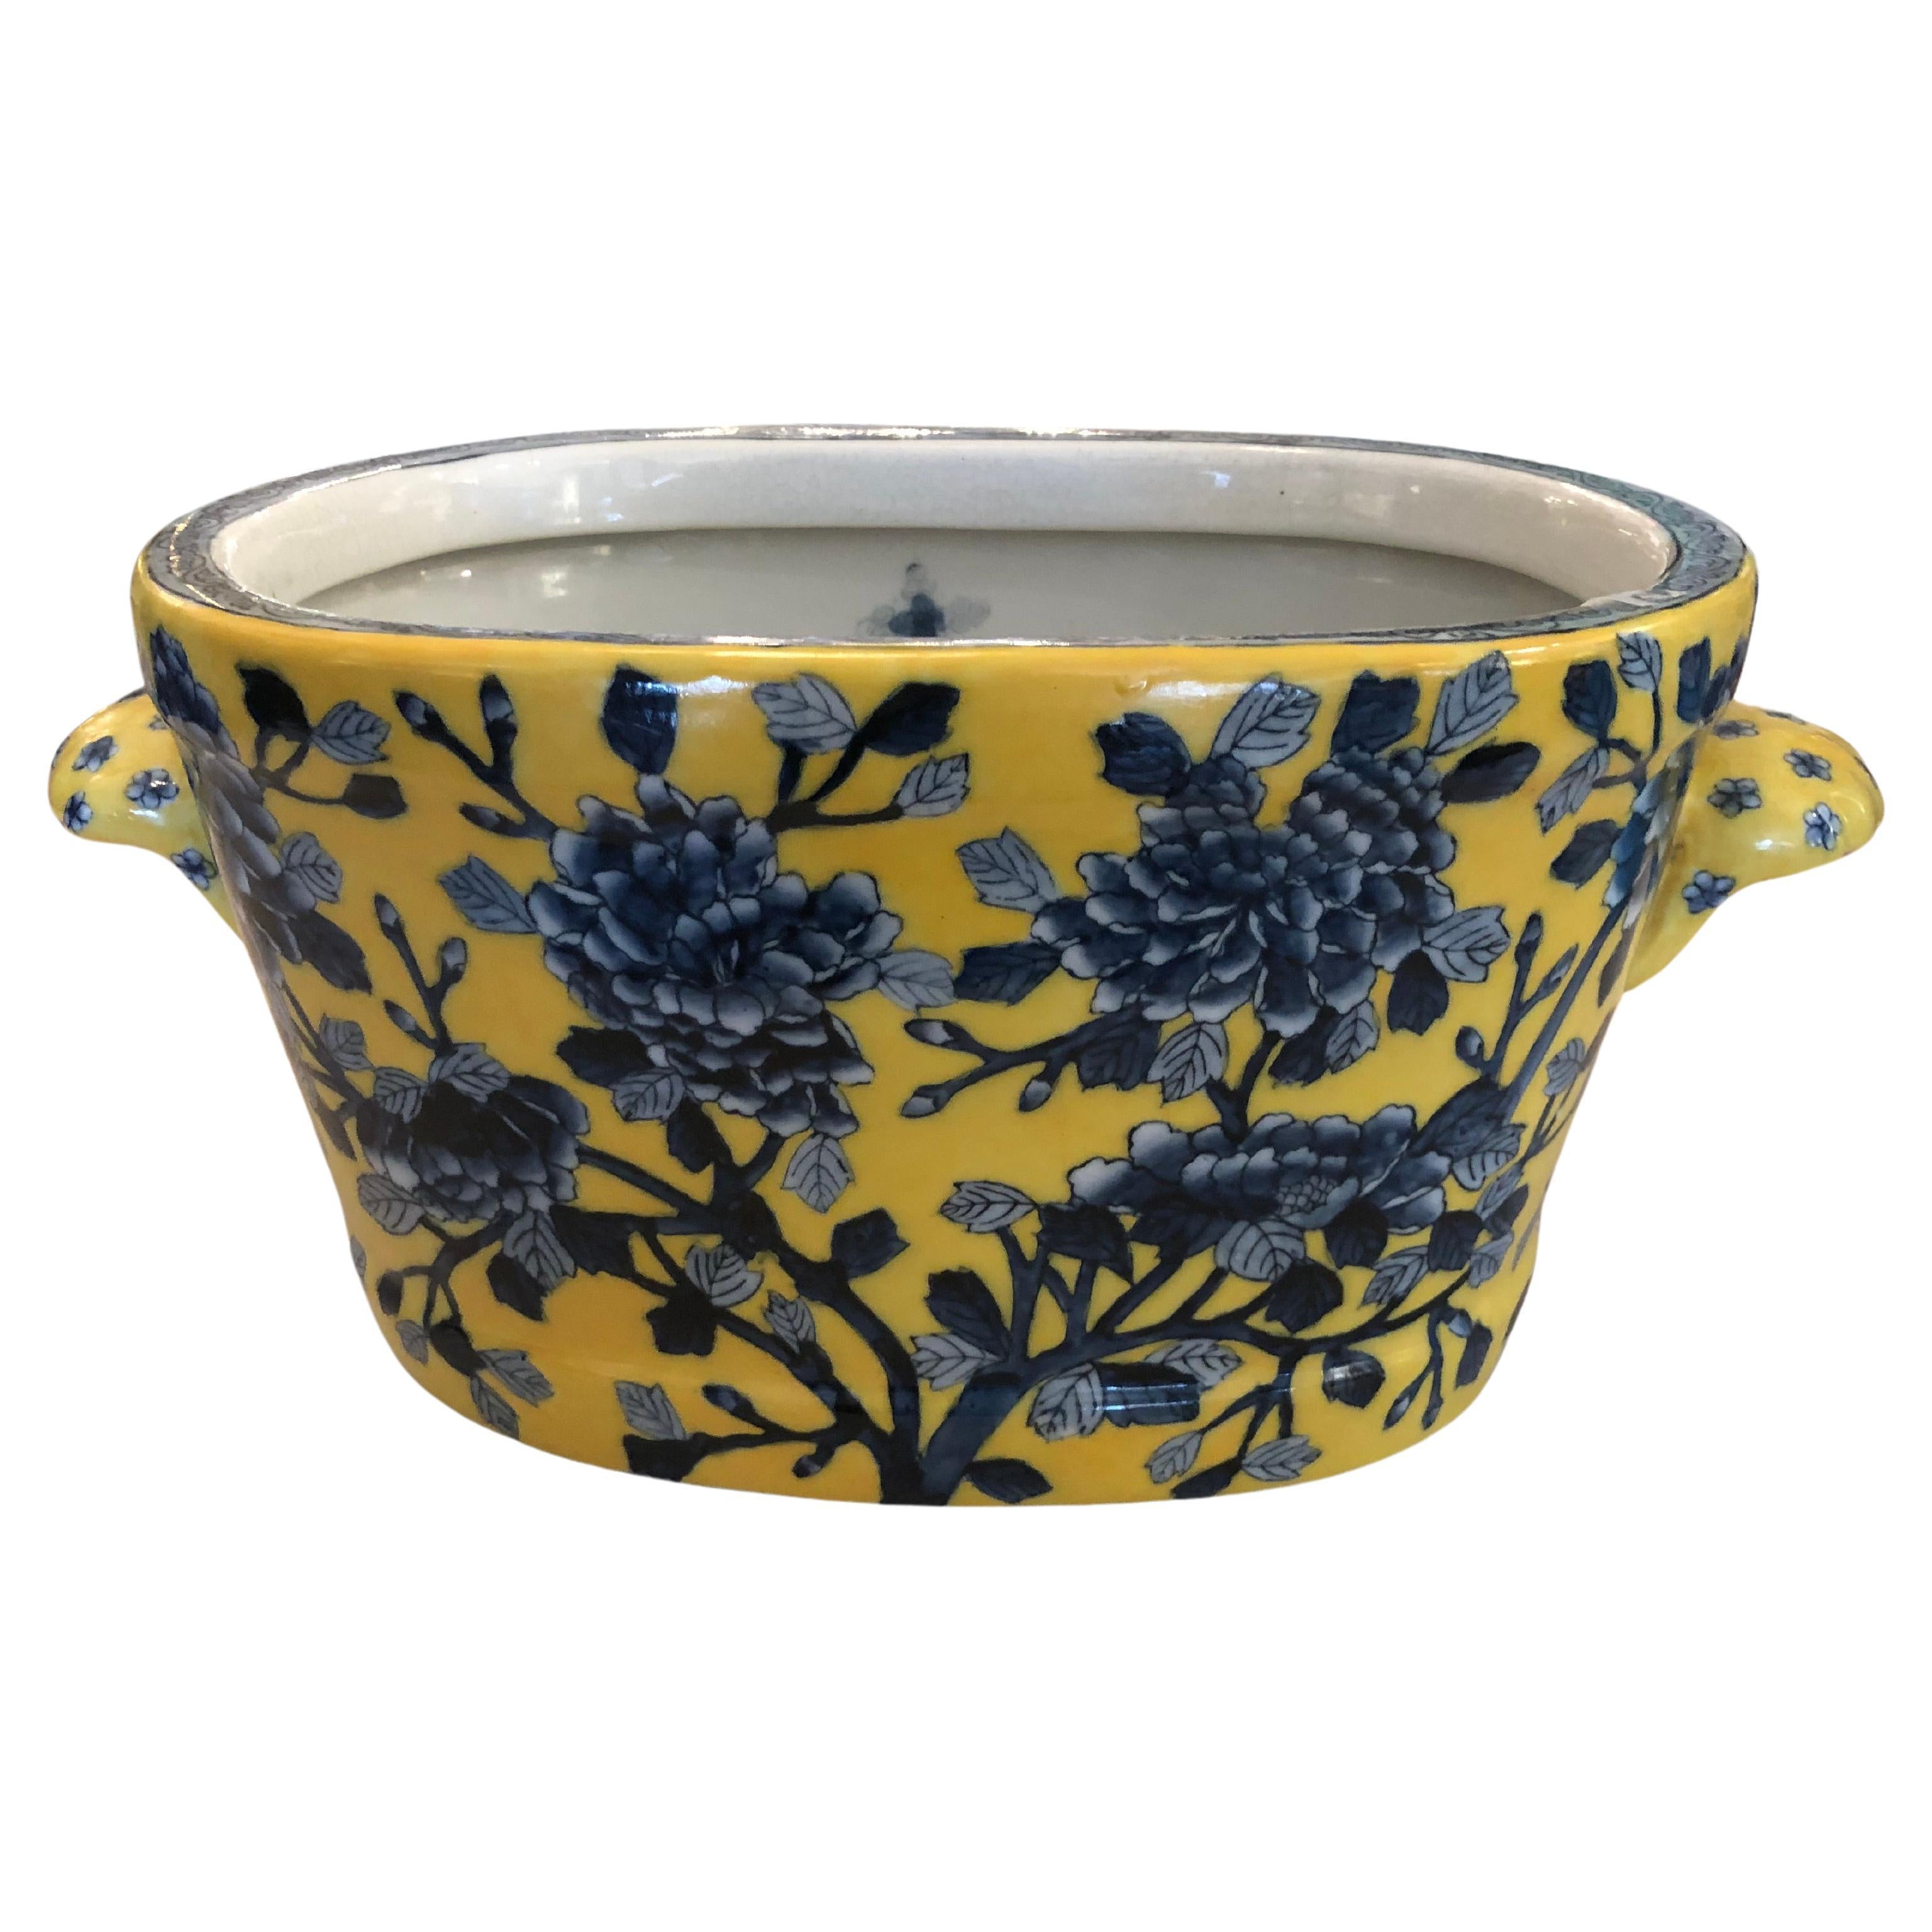 Gorgeous Ceramic Yellow & Blue Oval Planter Centerpiece